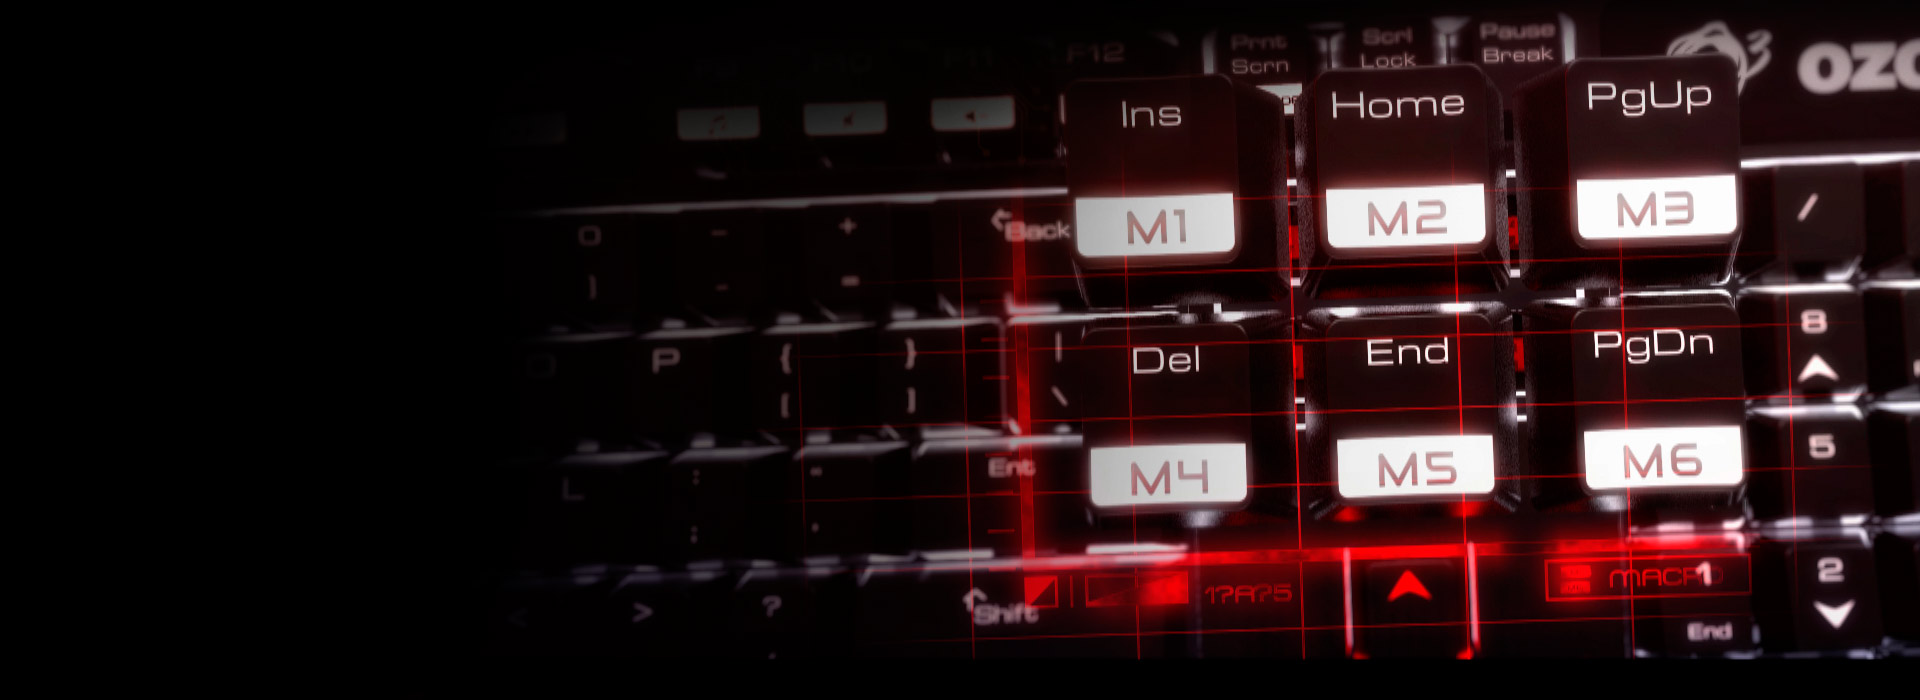 Keyboard OZONE STRIKE PRO Red Switch Mechanical Progaming Keyboard tích hợp 6 phím Macro tuỳ chỉnh dễ dàng